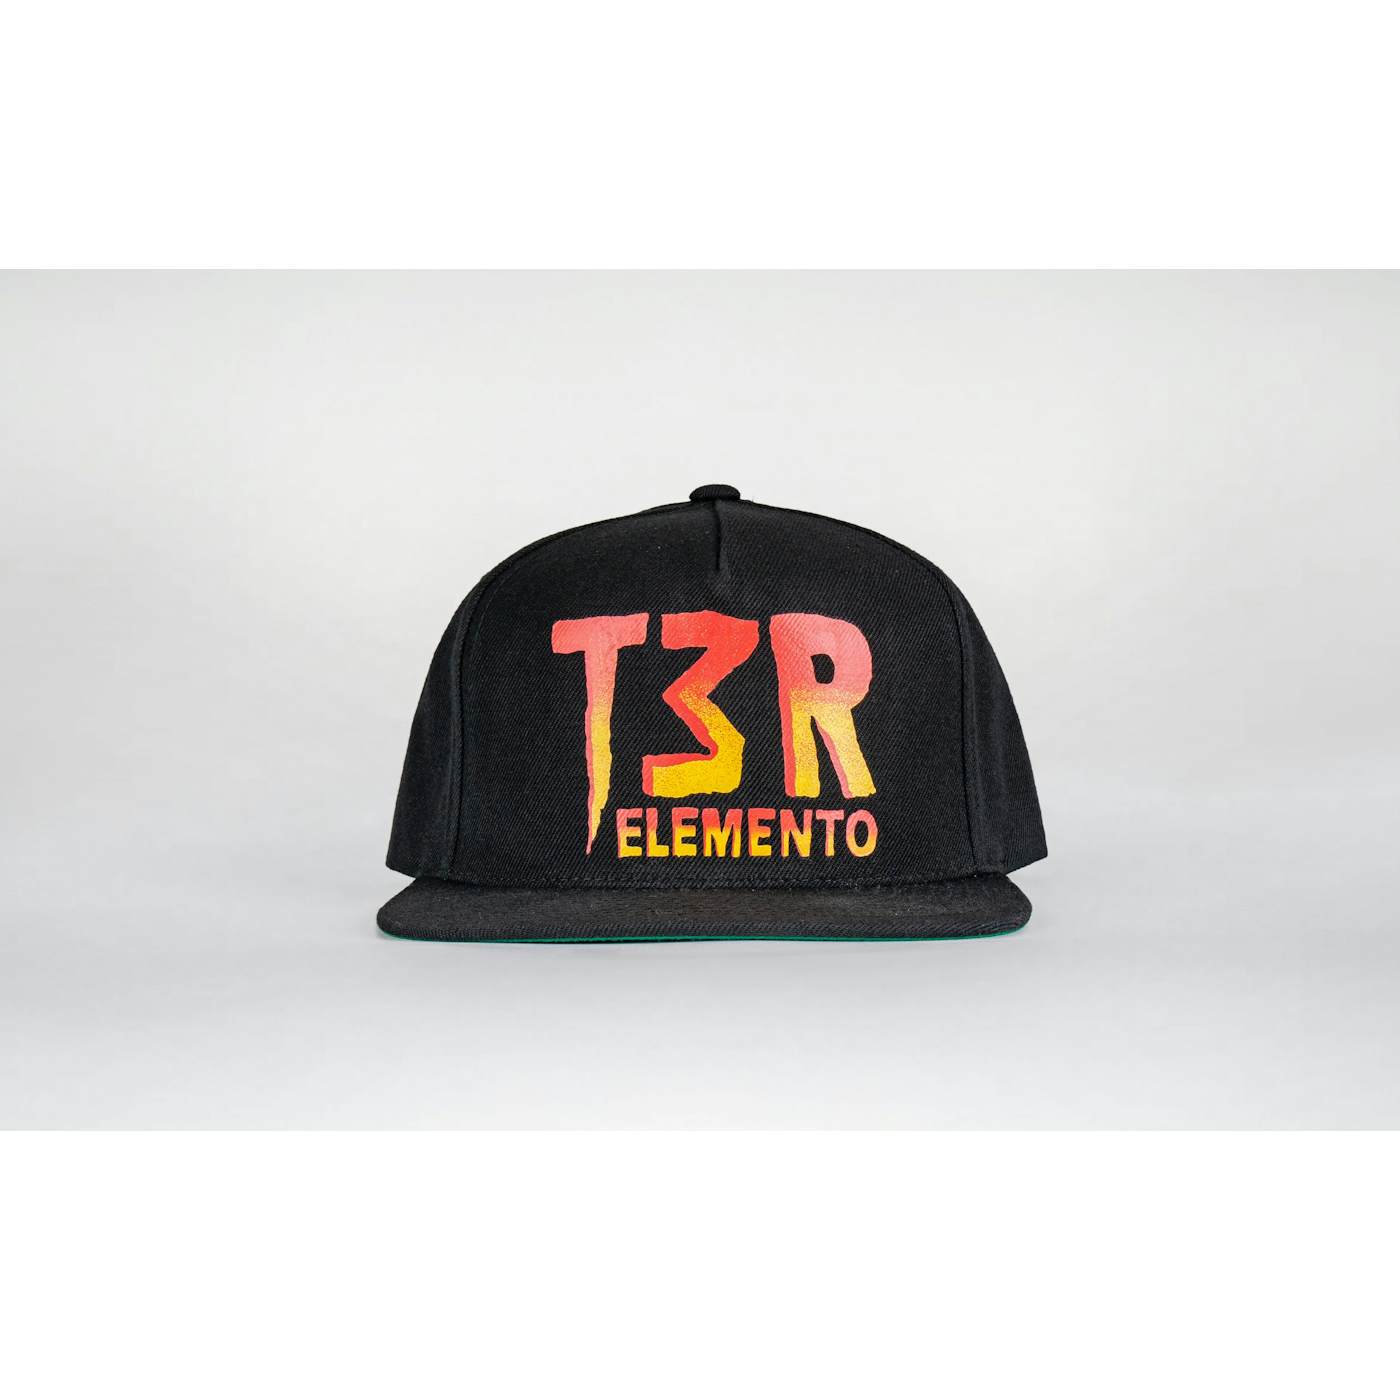 T3R Elemento T3R Splatter Snapback